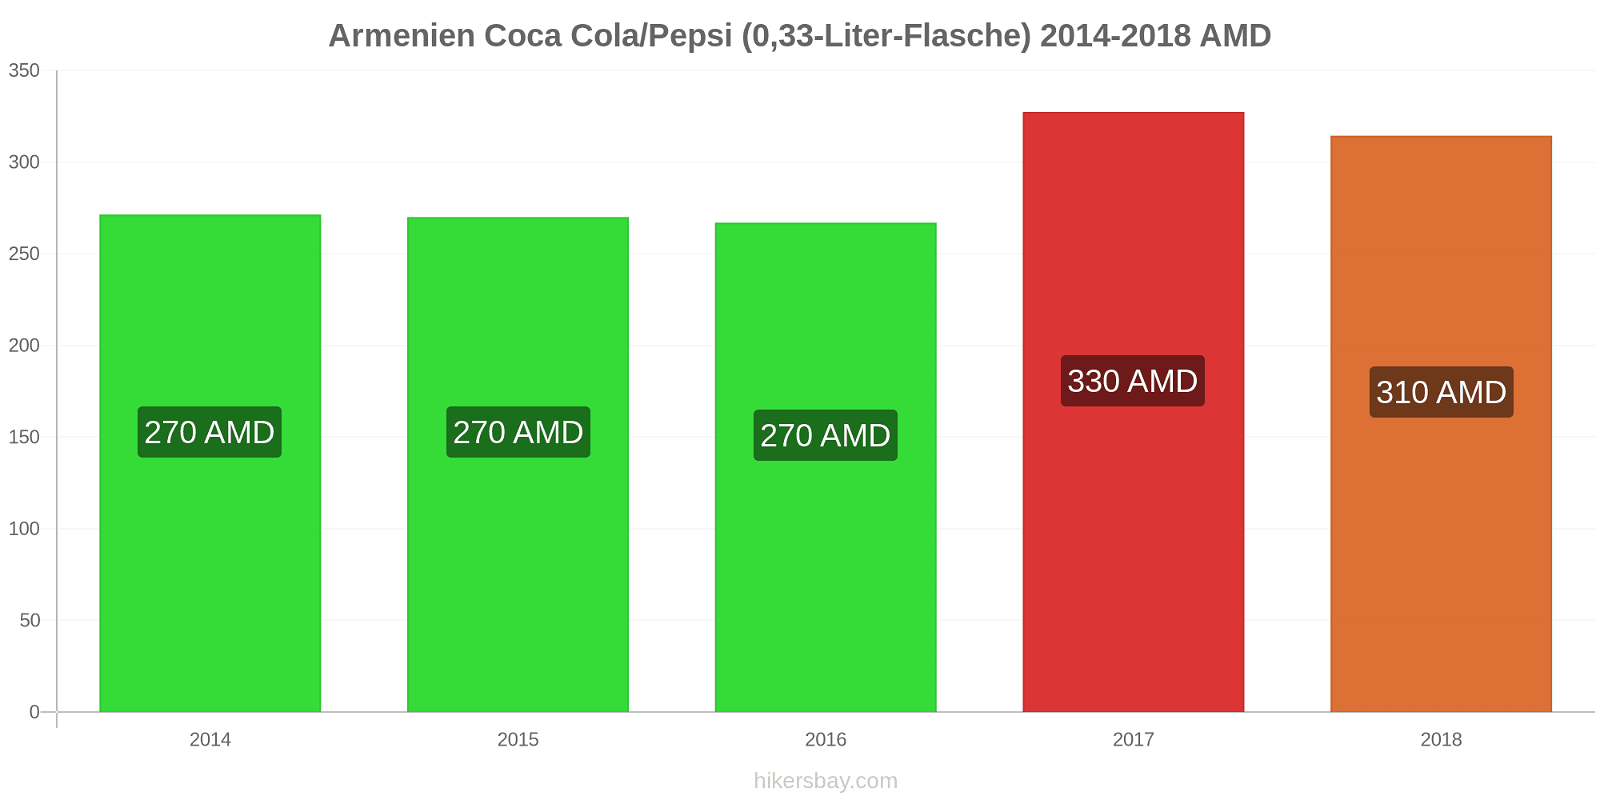 Armenien Preisänderungen Coke/Pepsi (0,33-Liter-Flasche) hikersbay.com